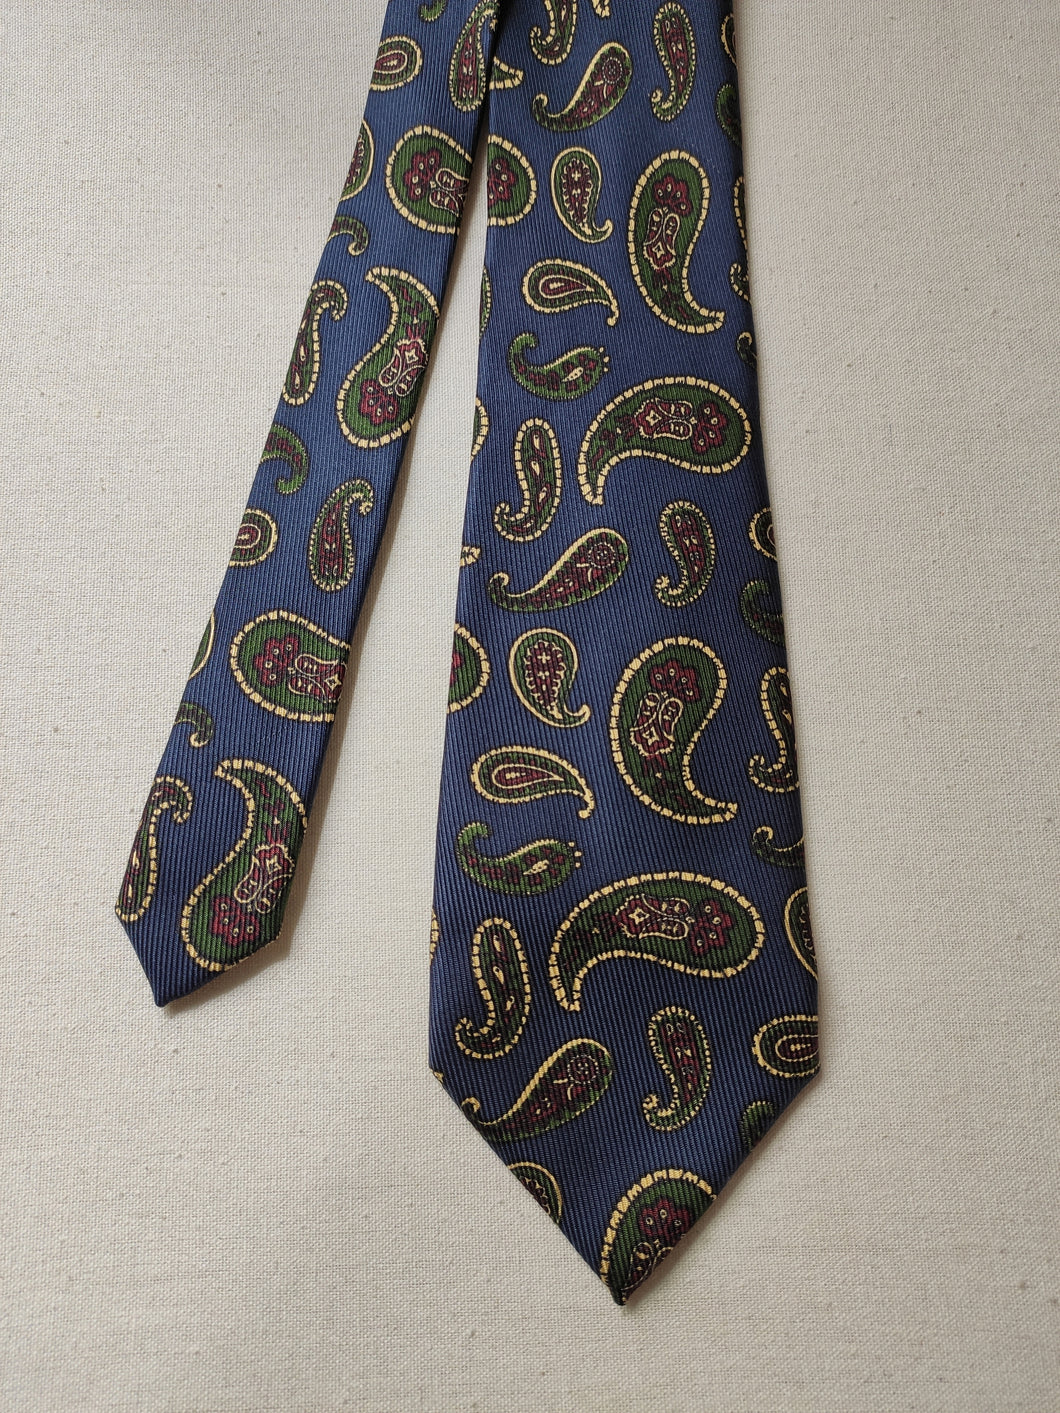 Arthur & Fox cravate paisley en soie marine à motif Made in Italy